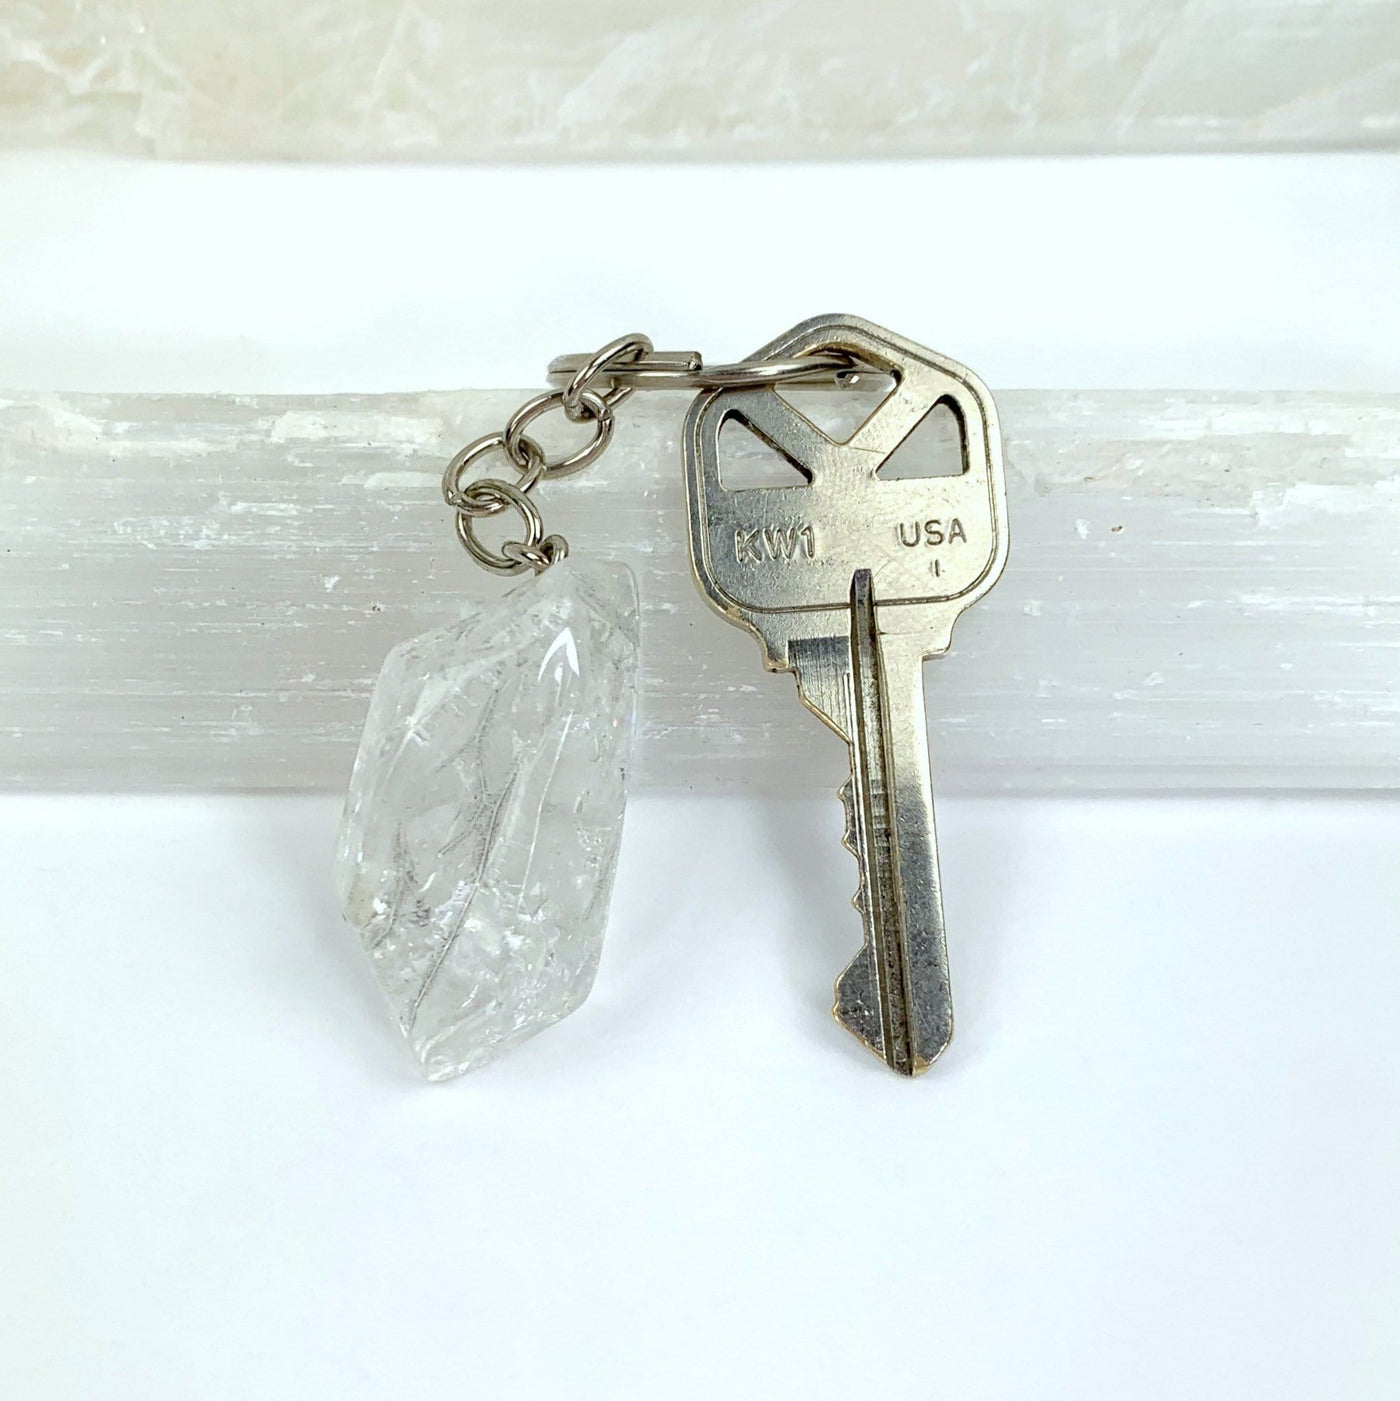 Crackle Quartz Keychain shown with a key